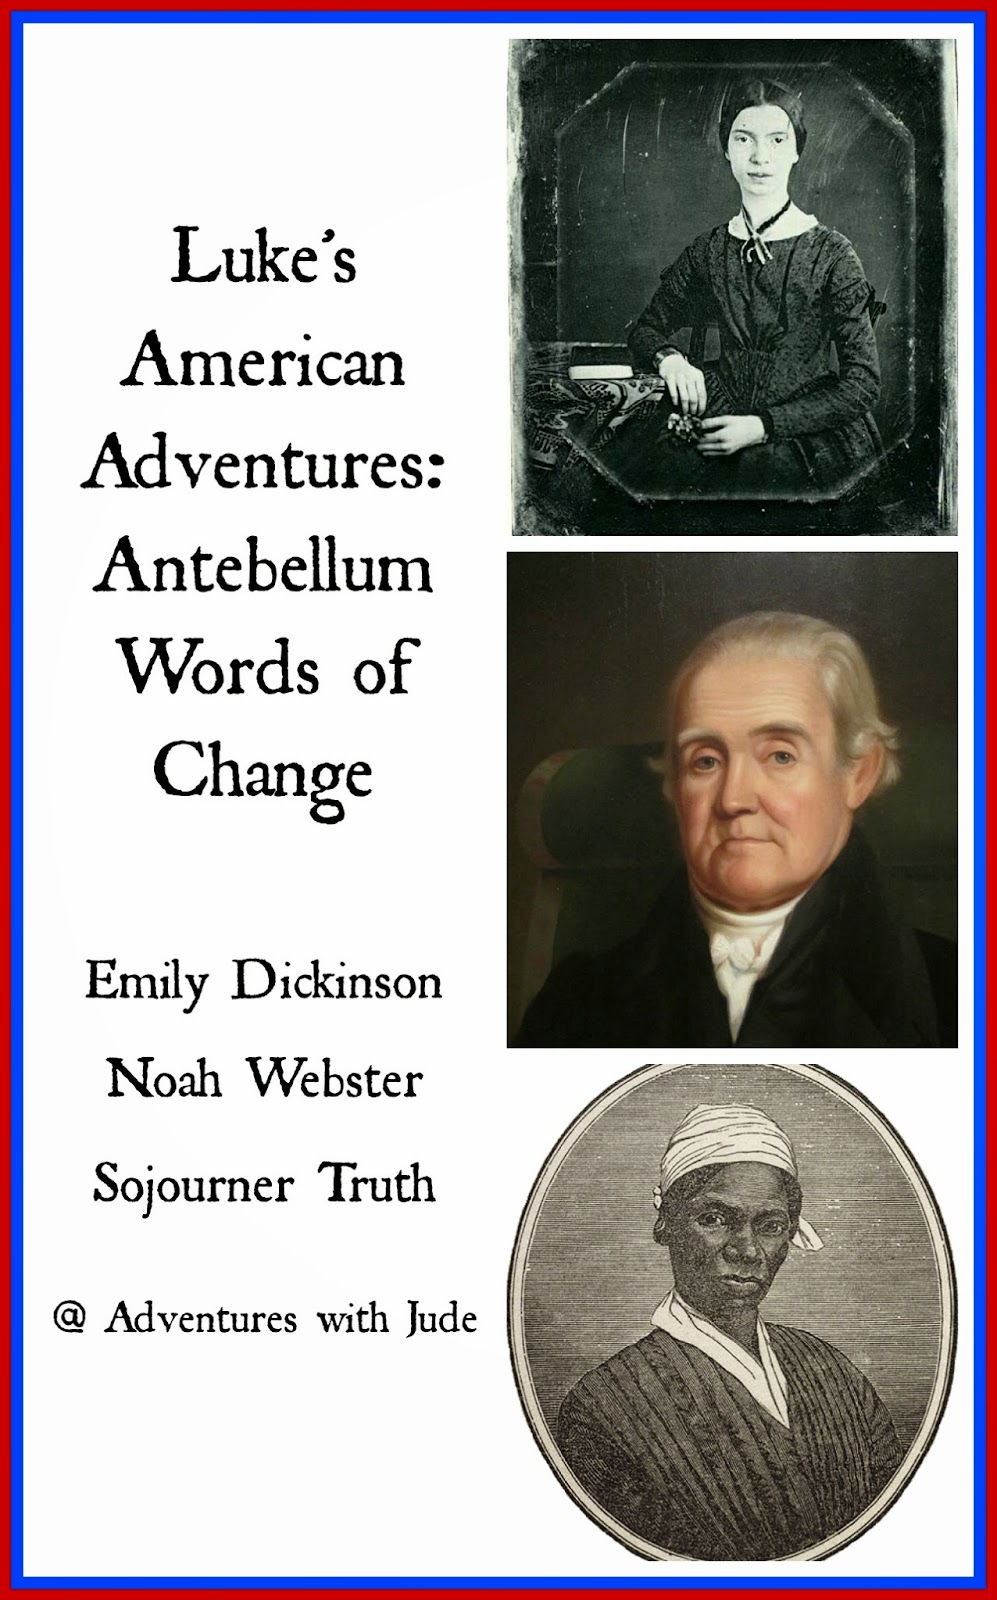 Luke's American Adventures: Antebellum Words of Change